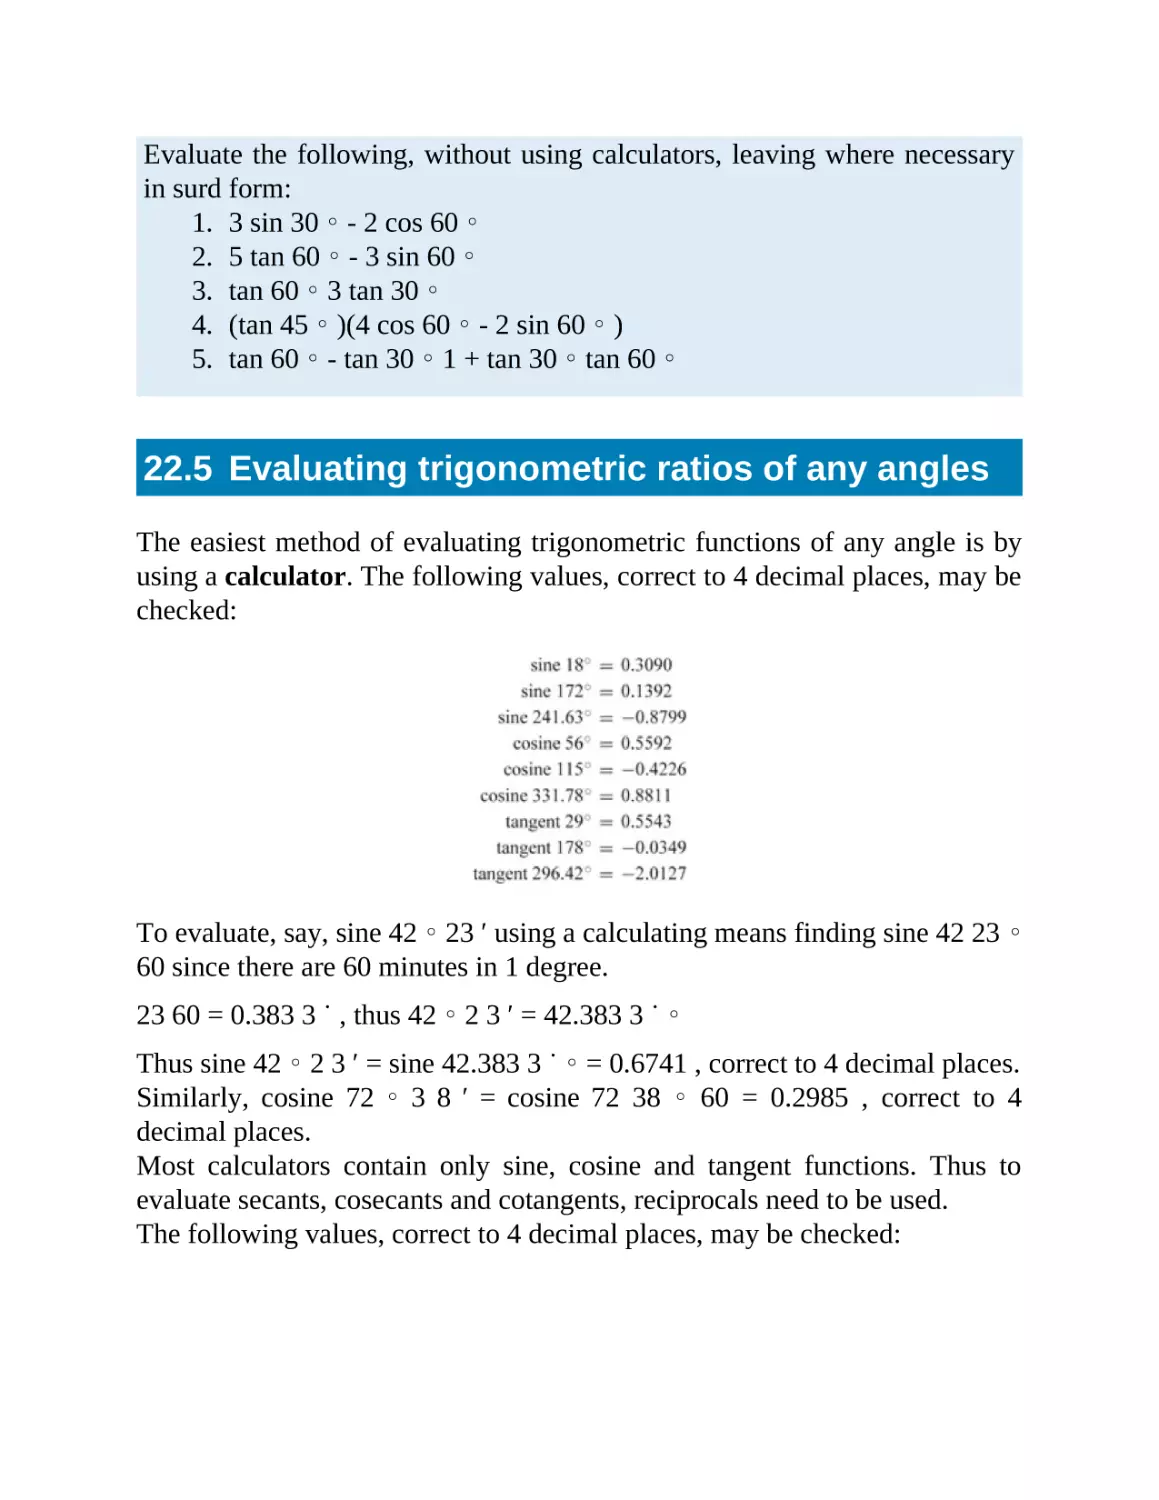 22.5 Evaluating trigonometric ratios of any angles